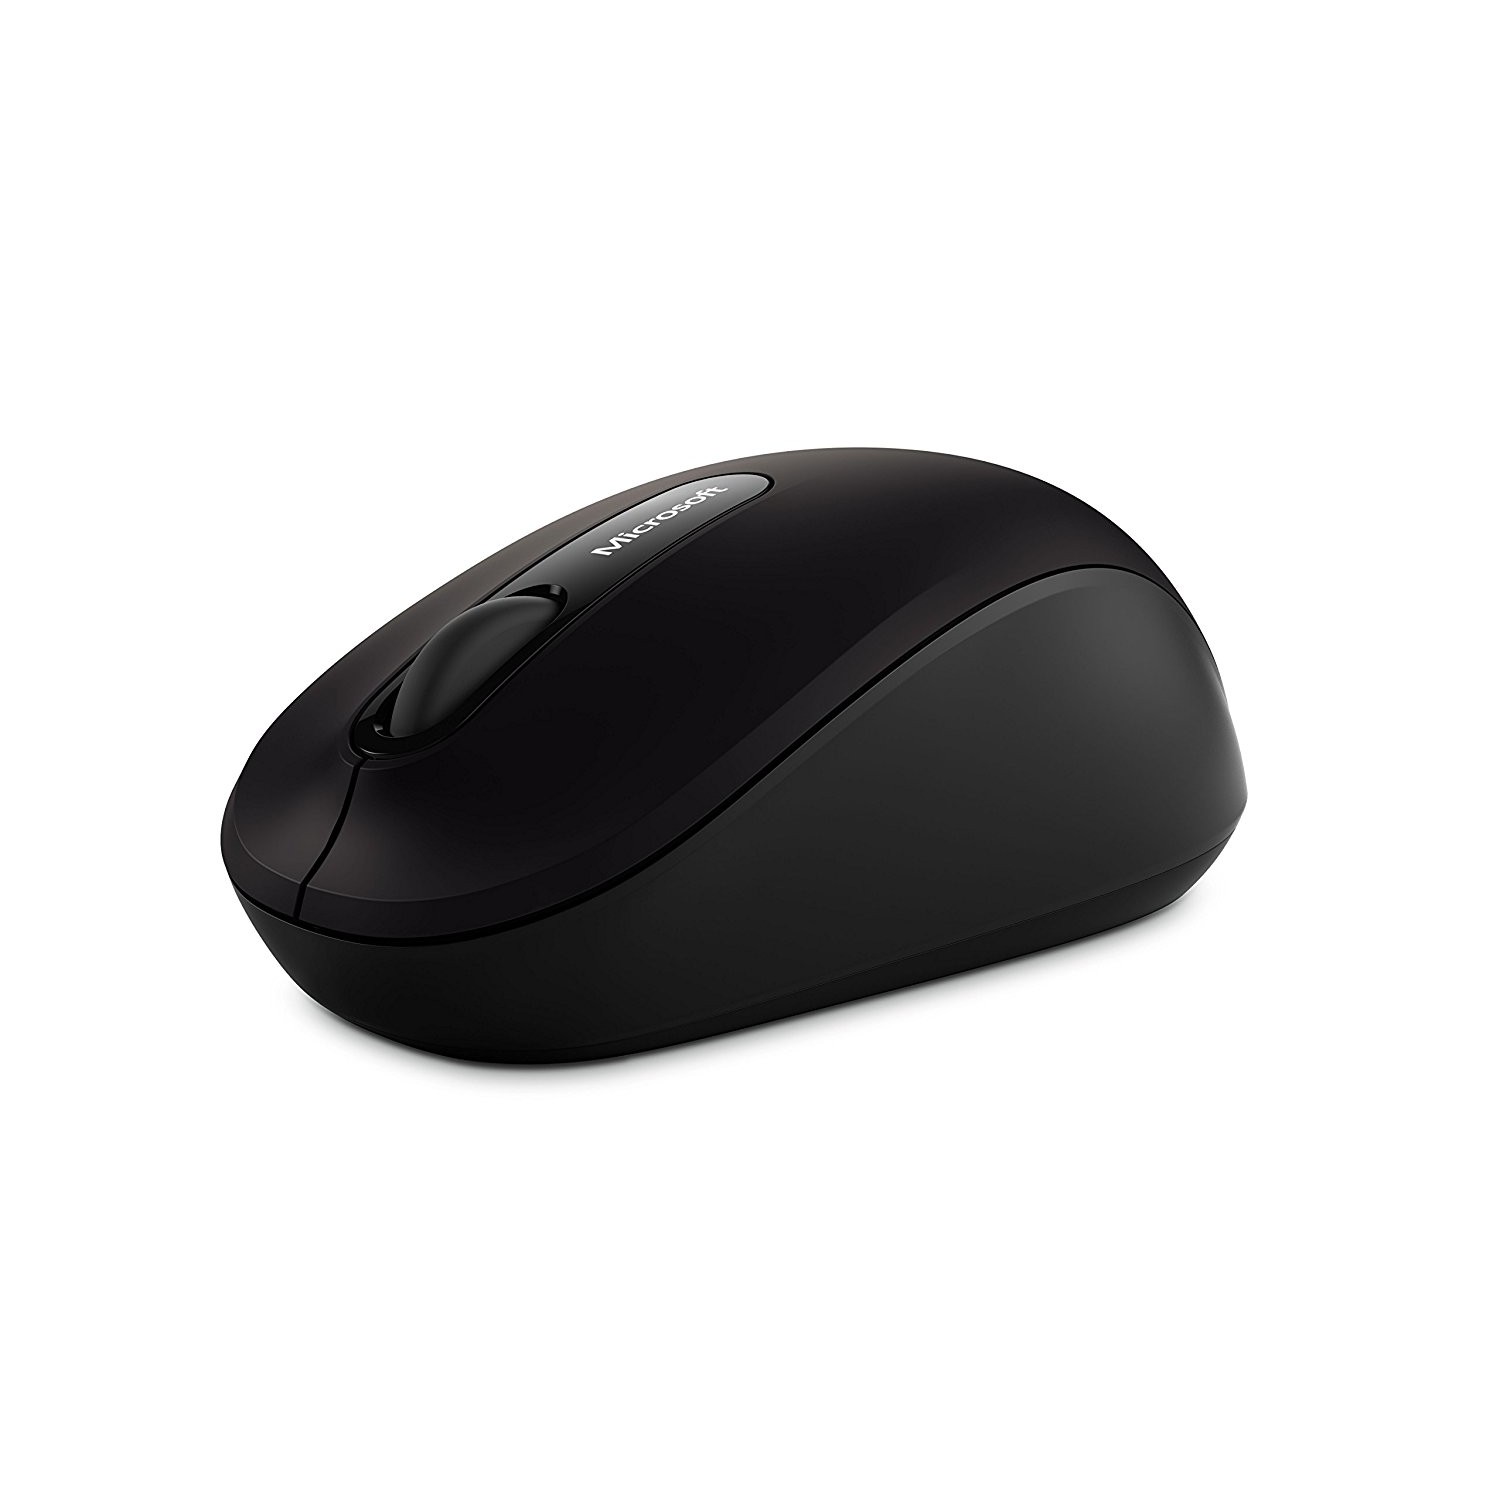  Microsoft Mobile 3600 Mouse-1